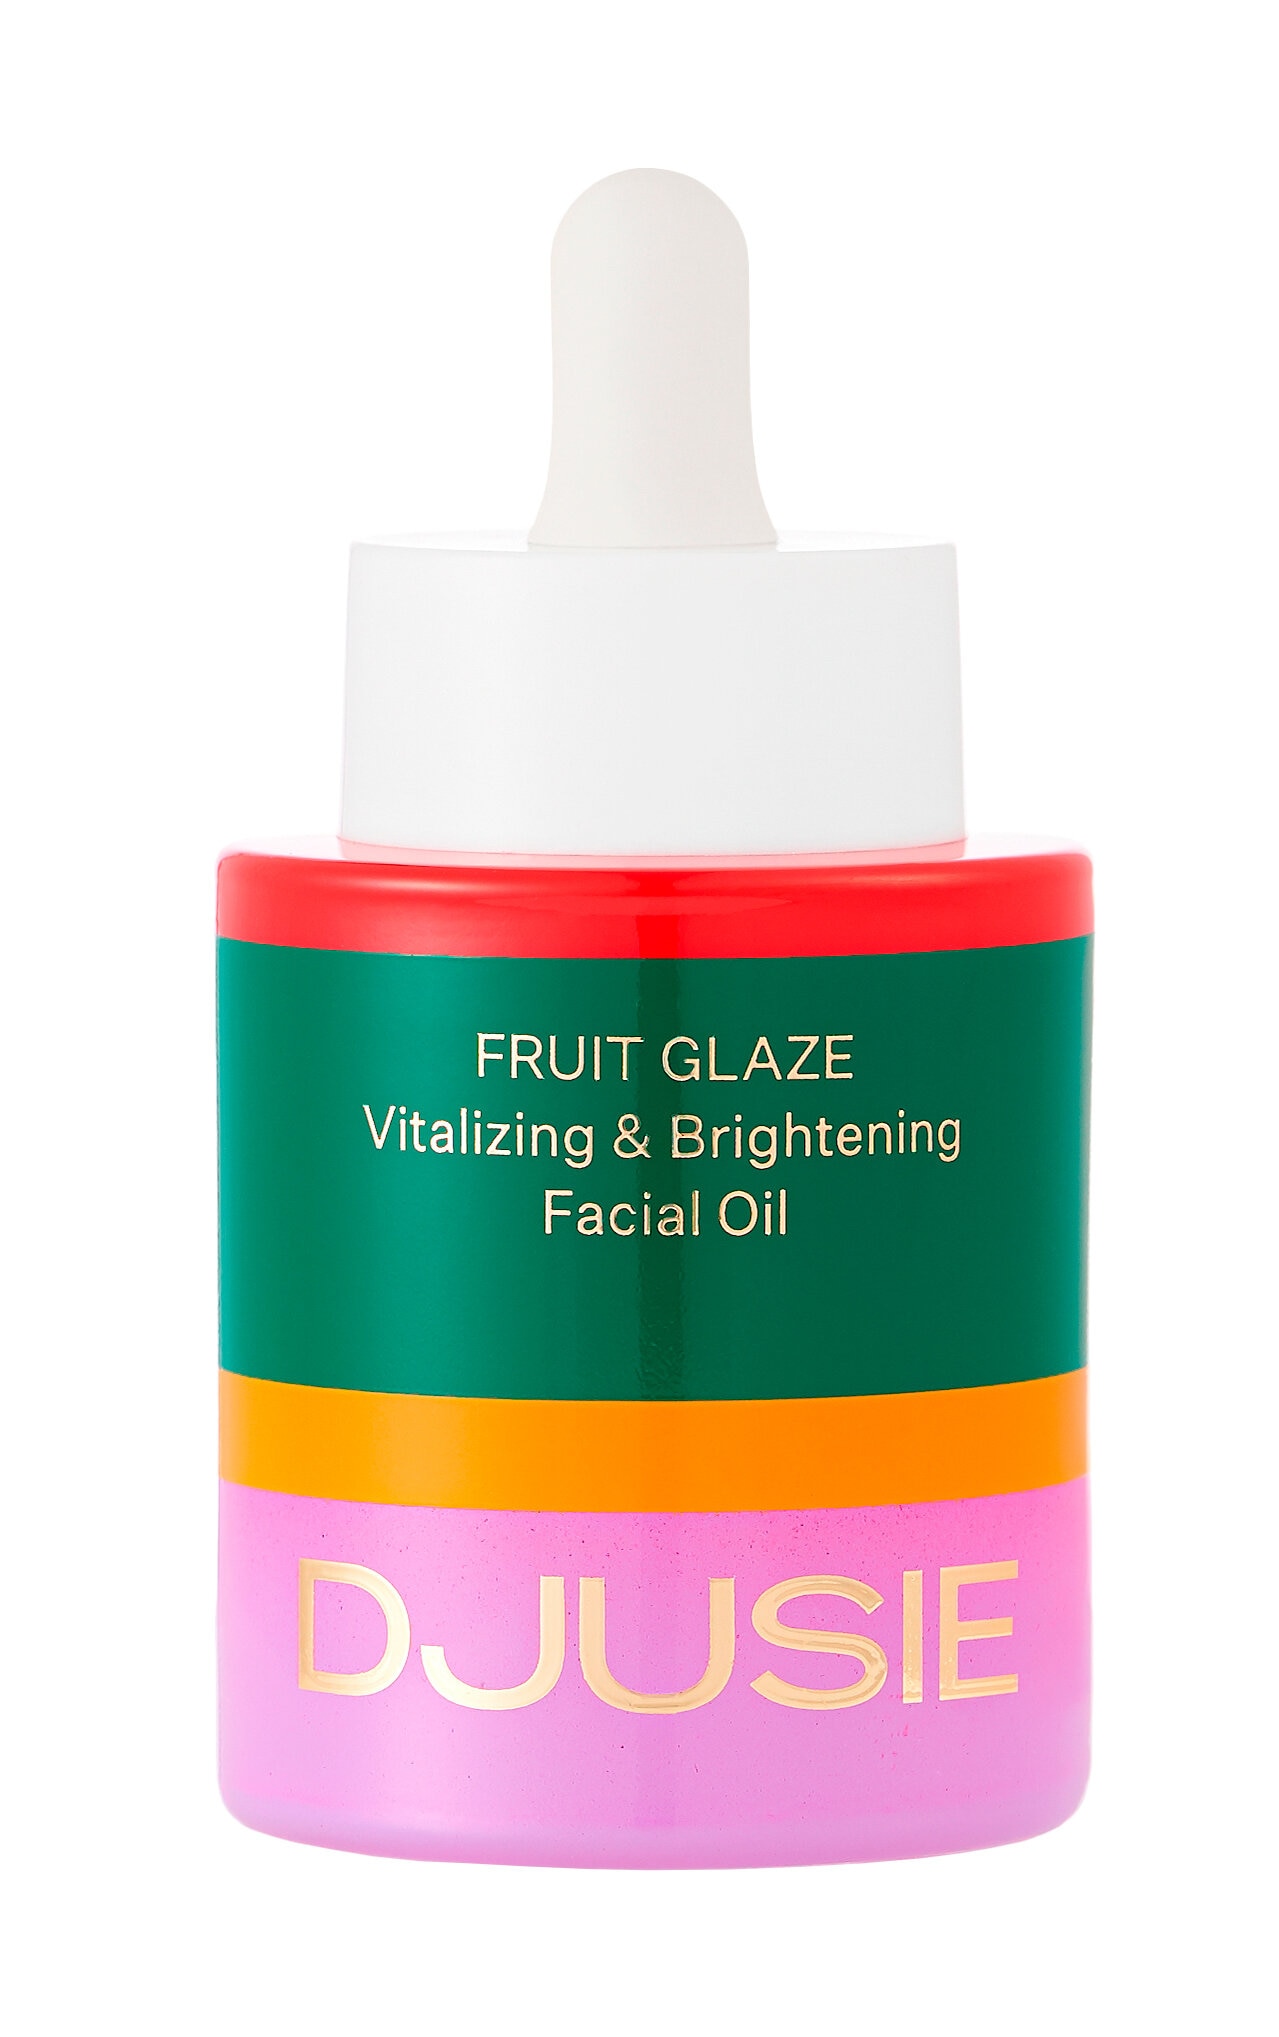 Fruit Glaze Vitalizing & Brightening Facial Oil